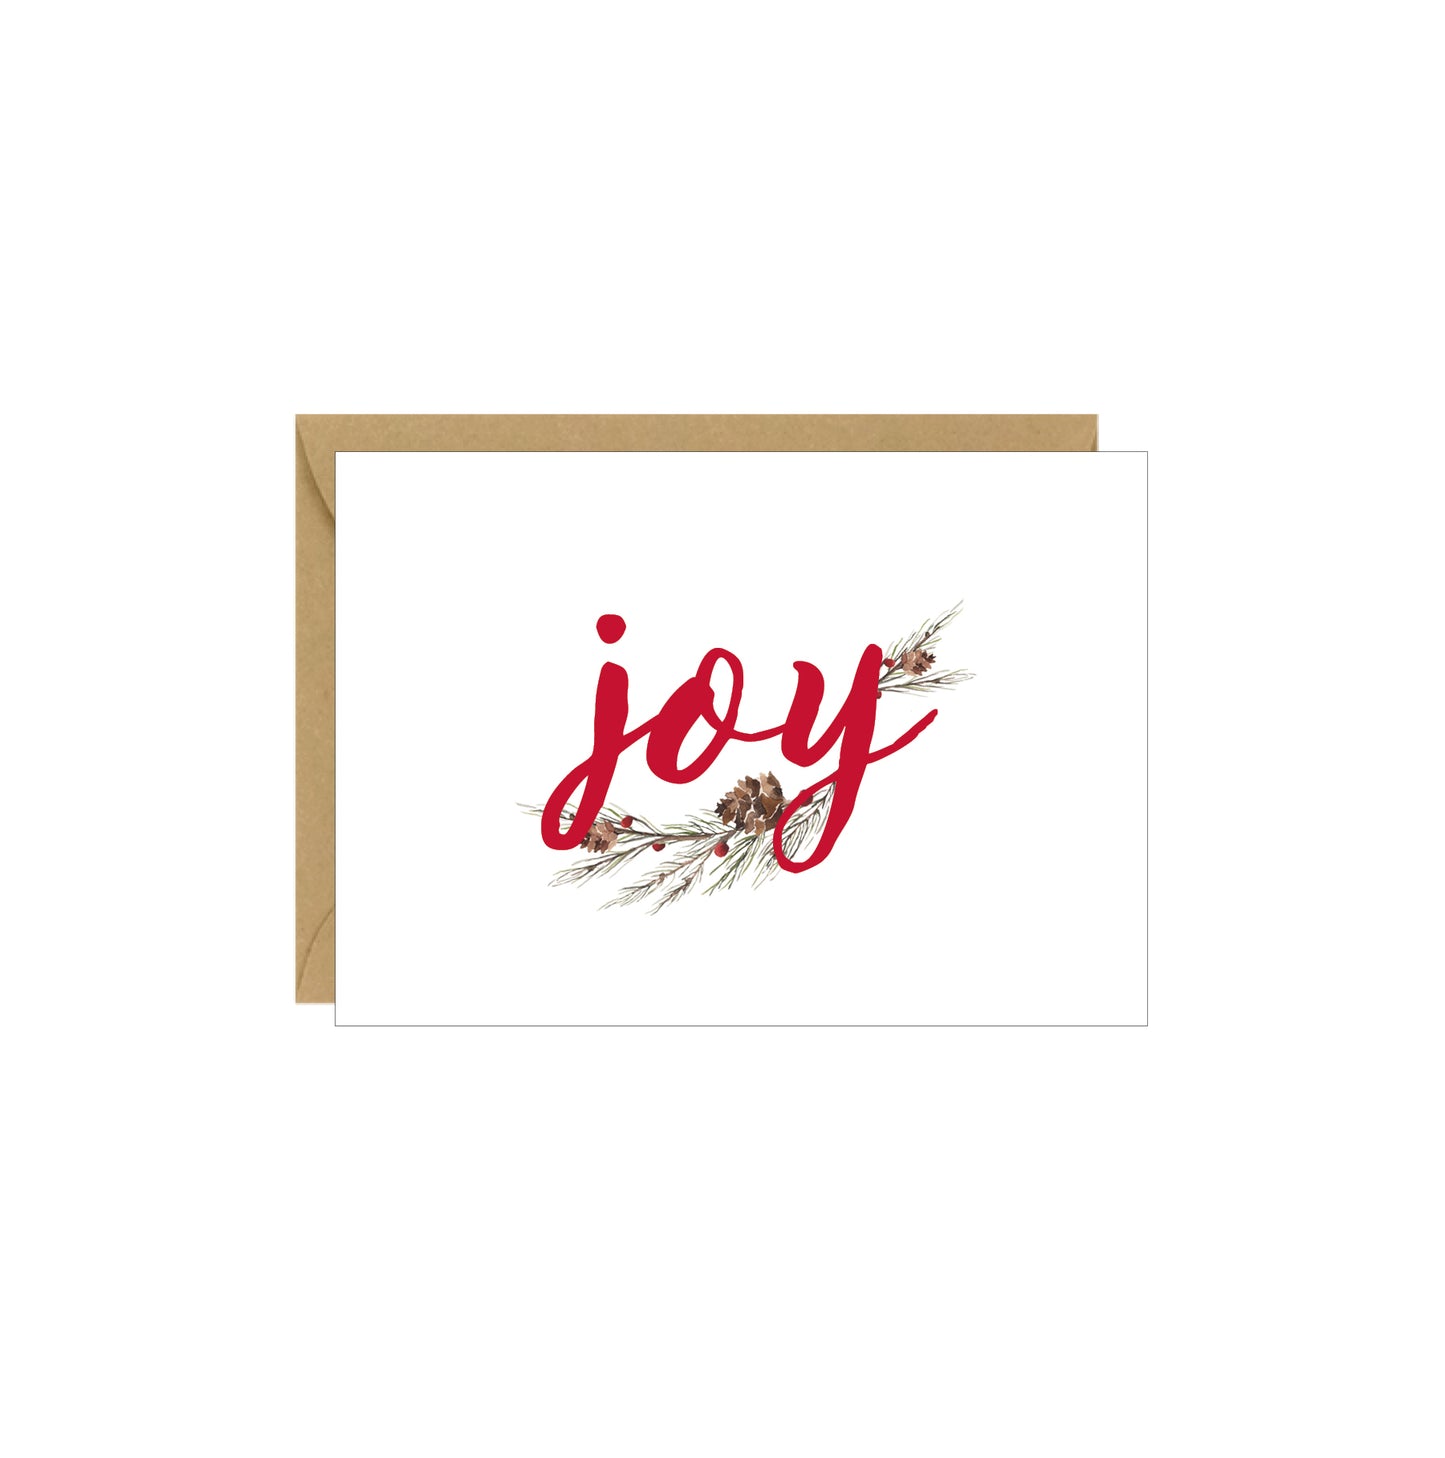 Enclosure Card - Joy Pinecone Branch - 4 pack